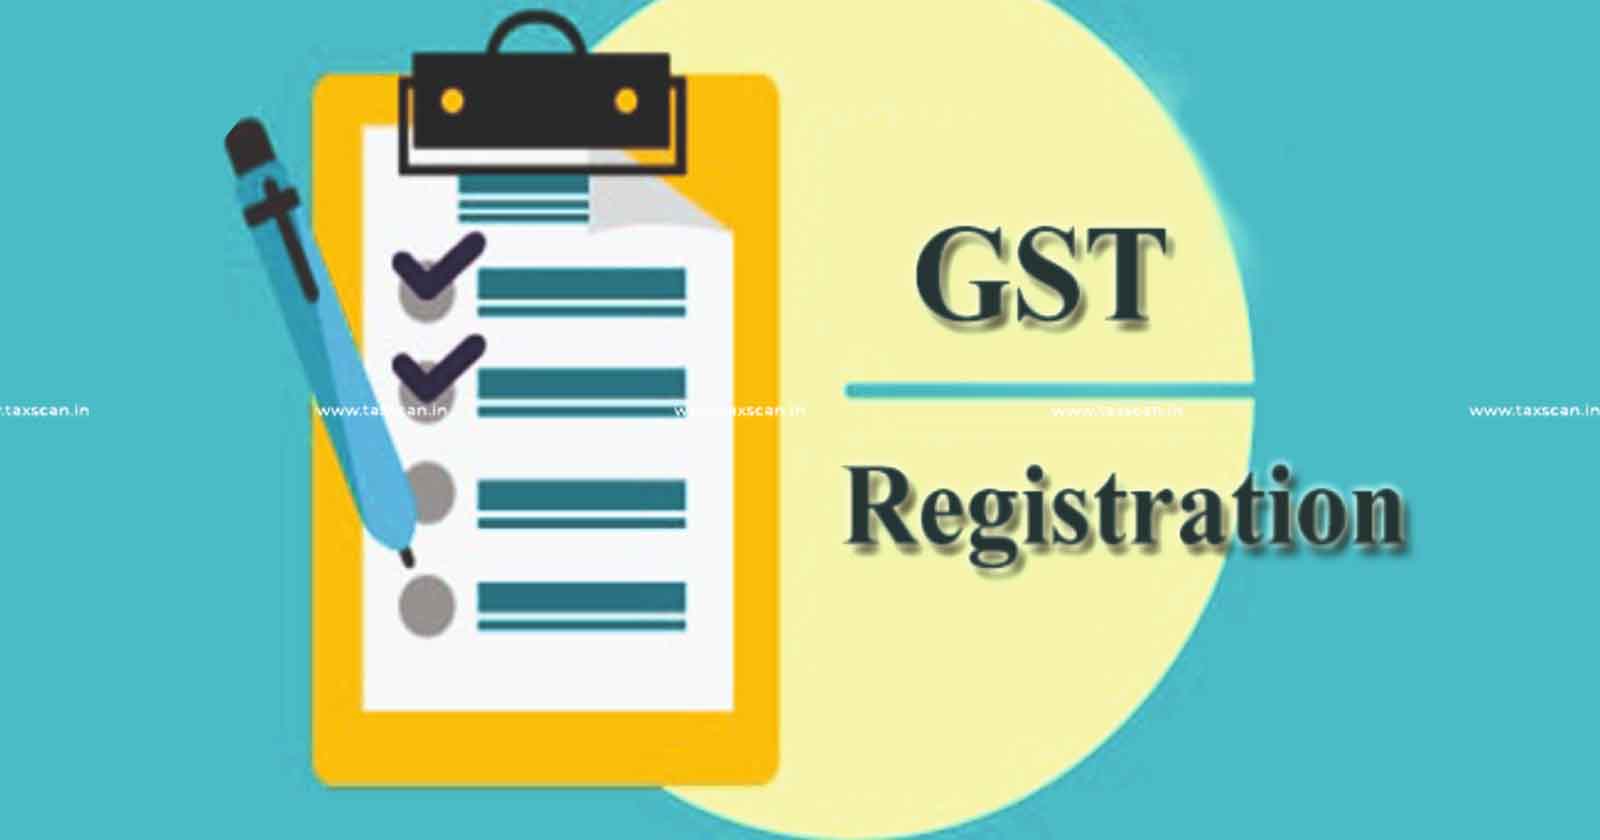 Revocation of GST Registration - GST Registration - GST - GST Notification - Karnataka Highcourt - File Revocation Application - taxscan